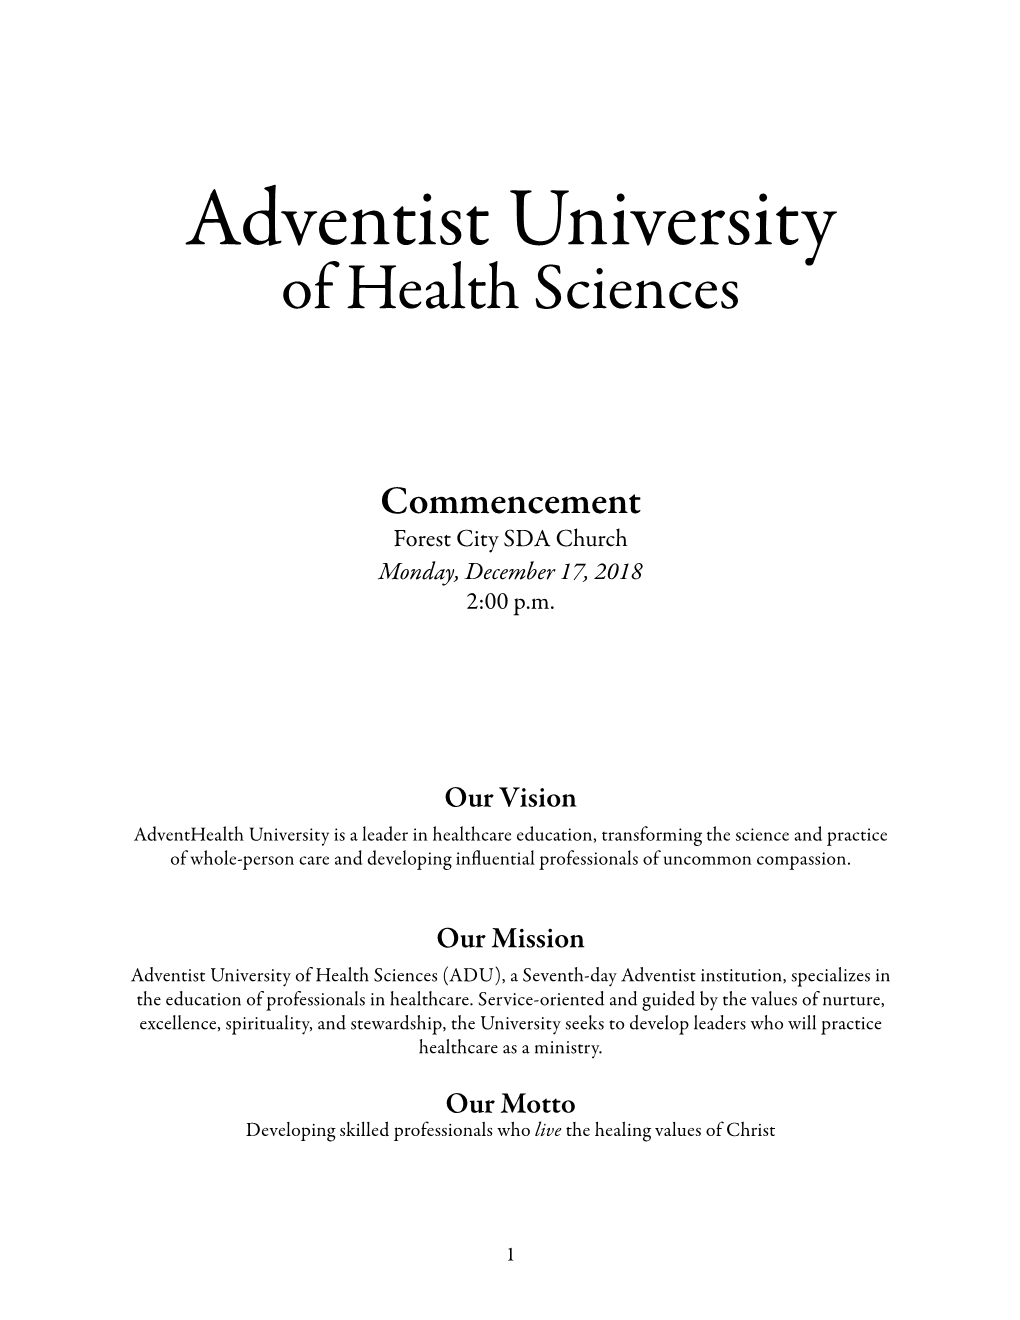 Adventist University of Health Sciences